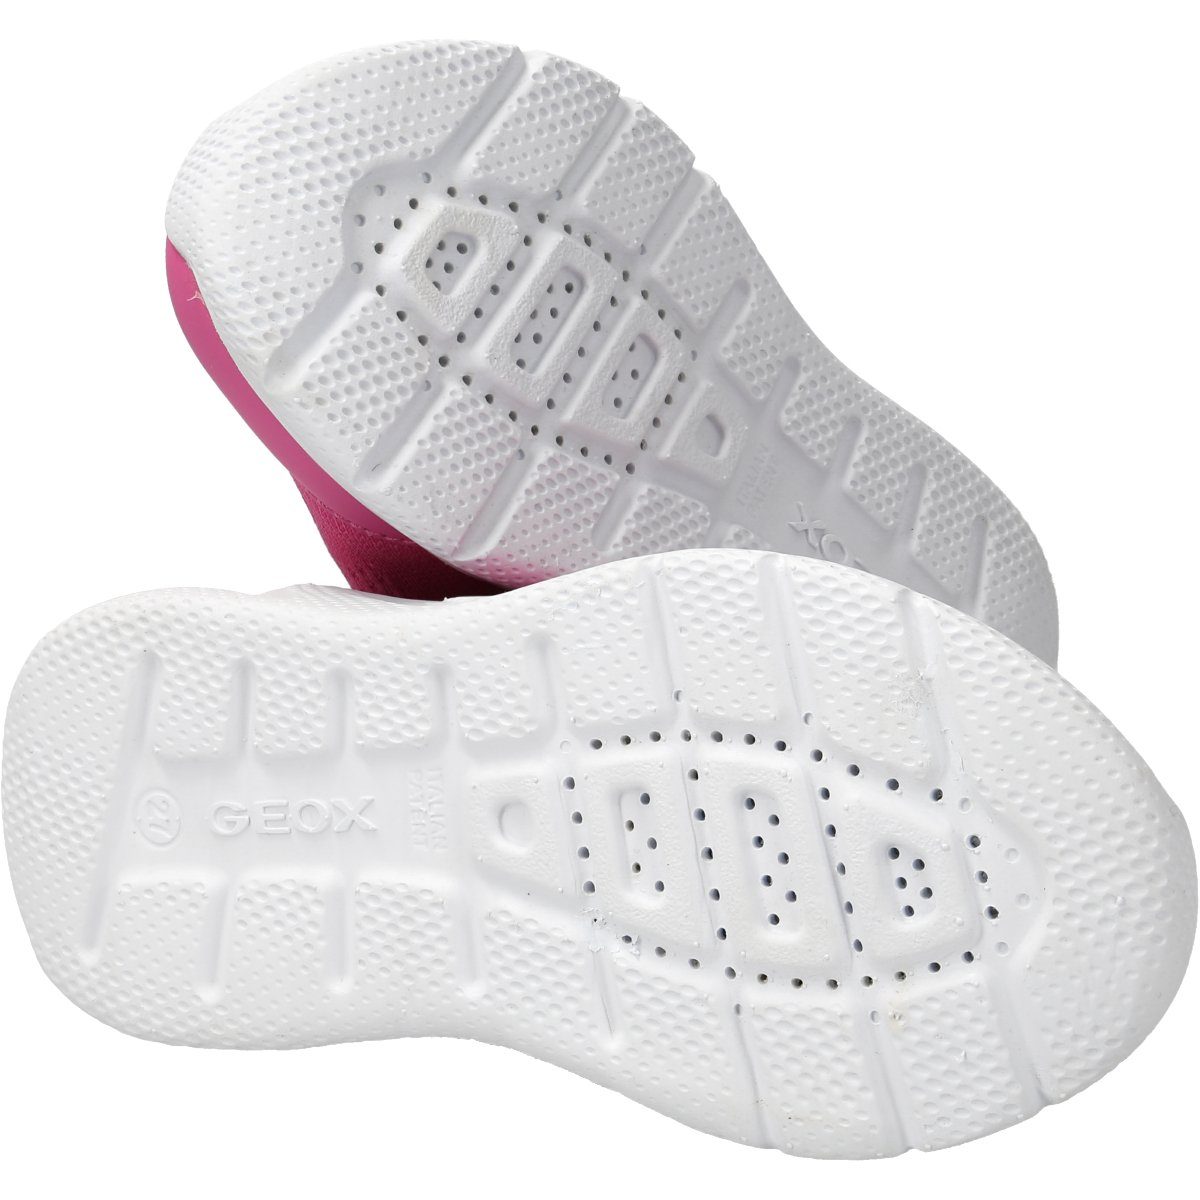 Pink Geox Sneaker SPRINTYE (FUCHSIA/WATERSEA)